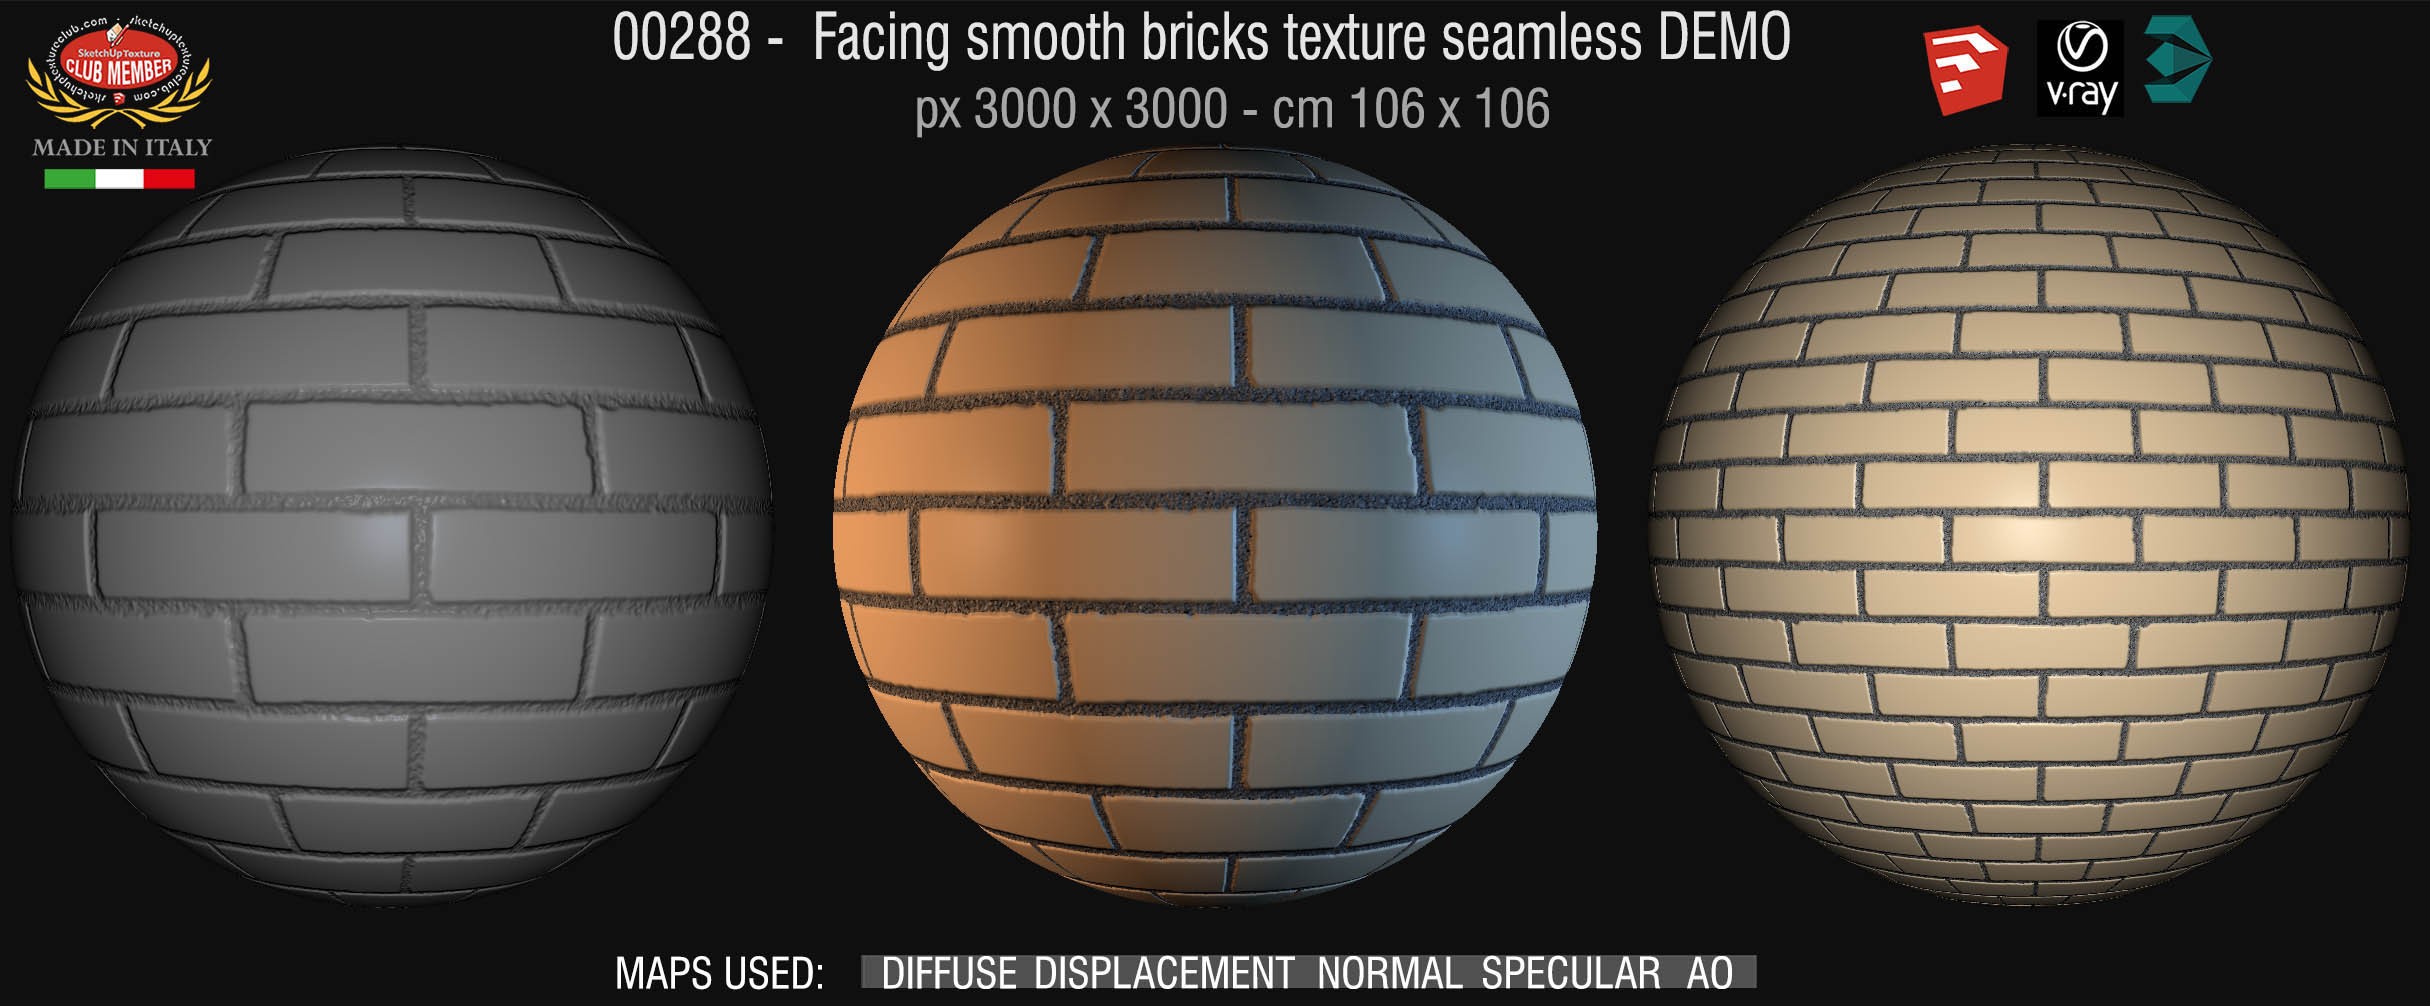 00288 Facing smooth bricks texture seamless + maps DEMO